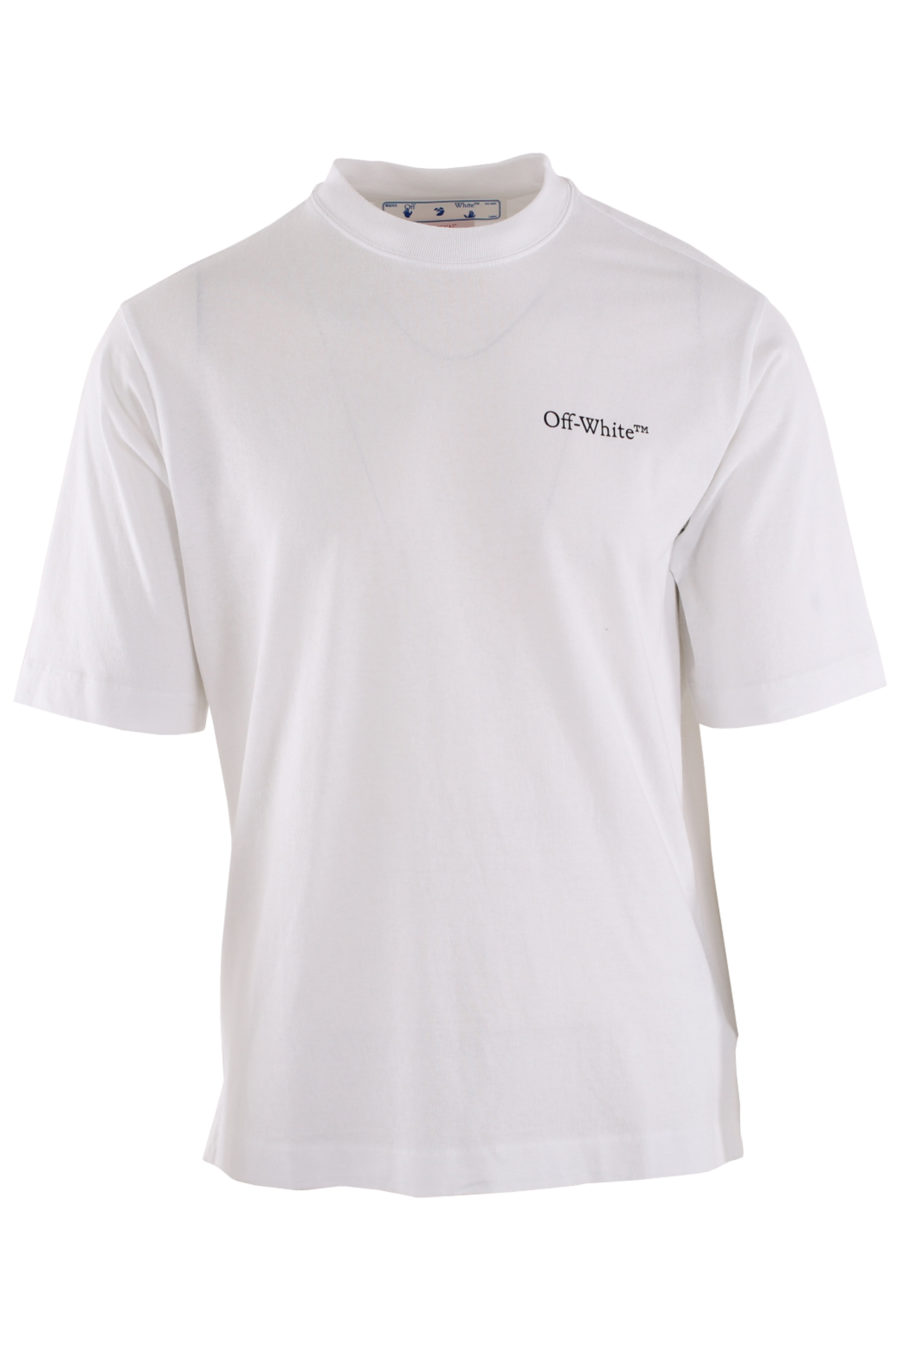 T-shirt blanc "Caravaggio Crowning" - IMG 8706